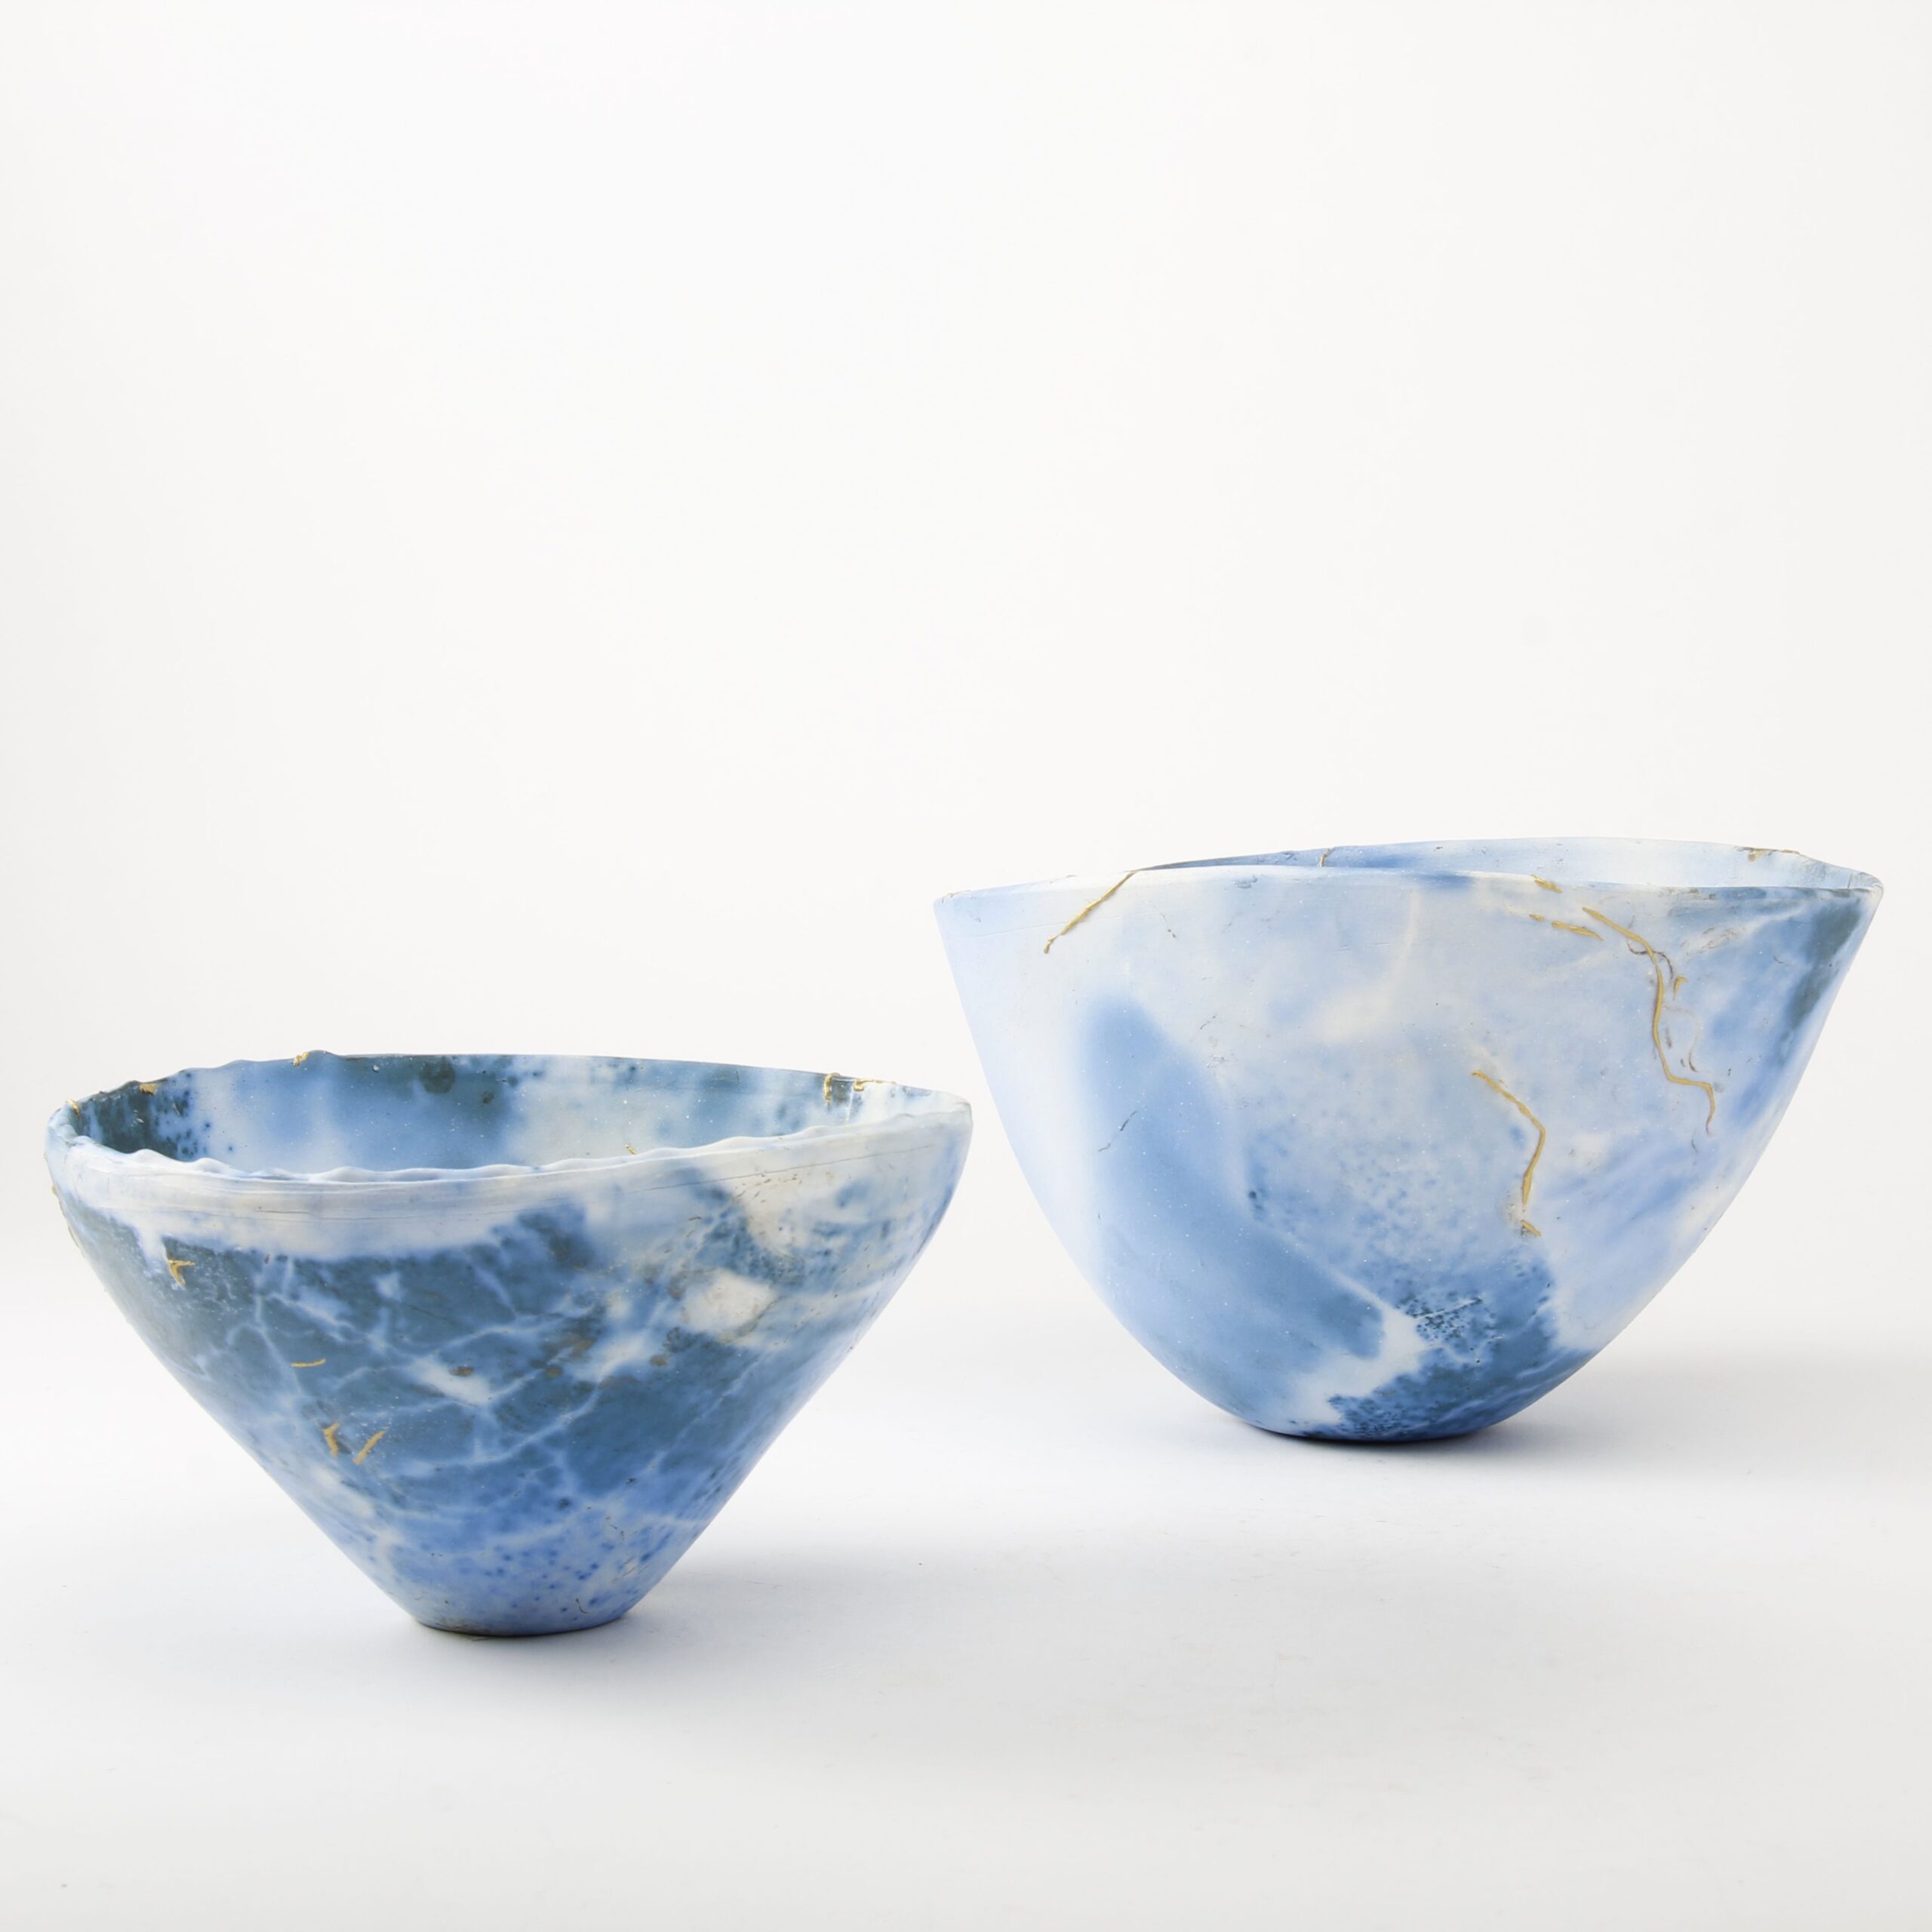 Alison Brannen: Medium Bowl Product Image 3 of 6